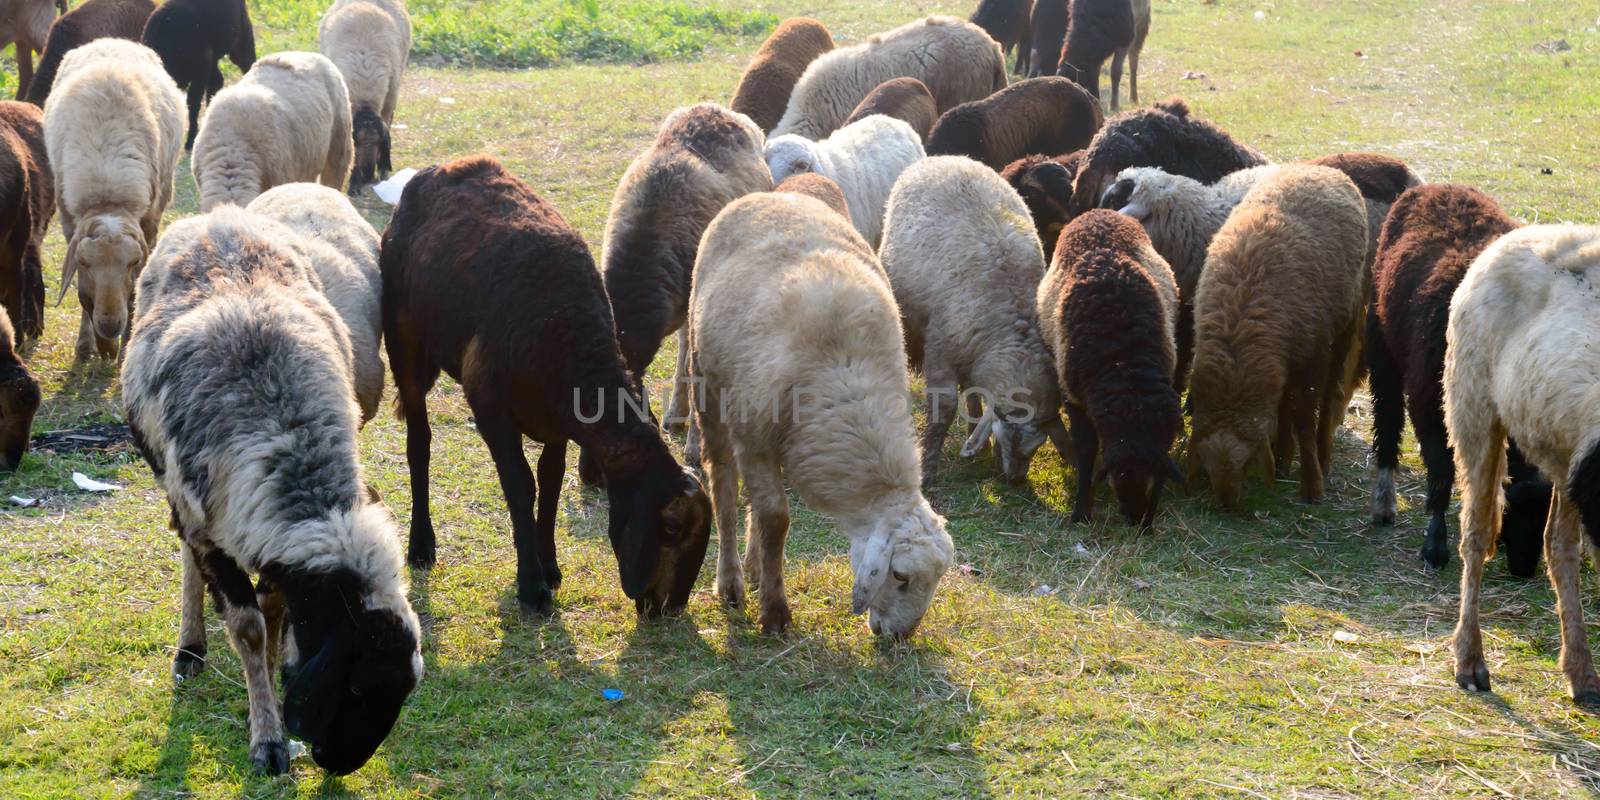 Flock of Domestic Sheep, Ewe, Lamb, Ram (Ovis aries species genus) grazing in a sheep farm in Summer Sunset. Typically livestock ruminant mammals. Artiodactyla family. Dairy cattle Background theme.